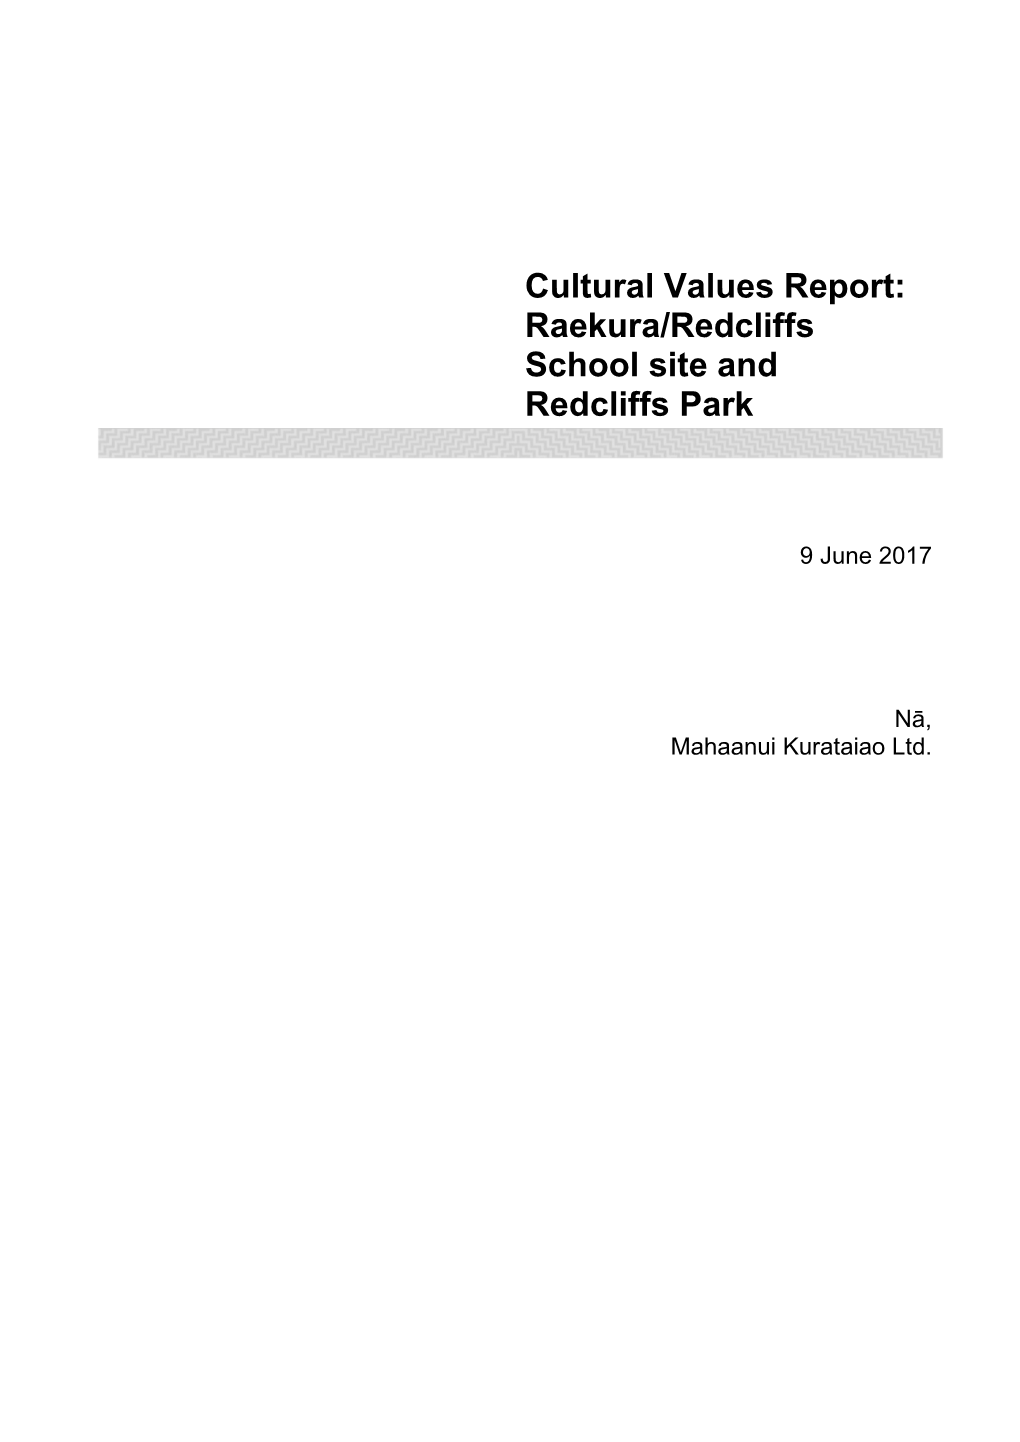 Cultural Values Report: Raekura/Redcliffs School Site and Redcliffs Park